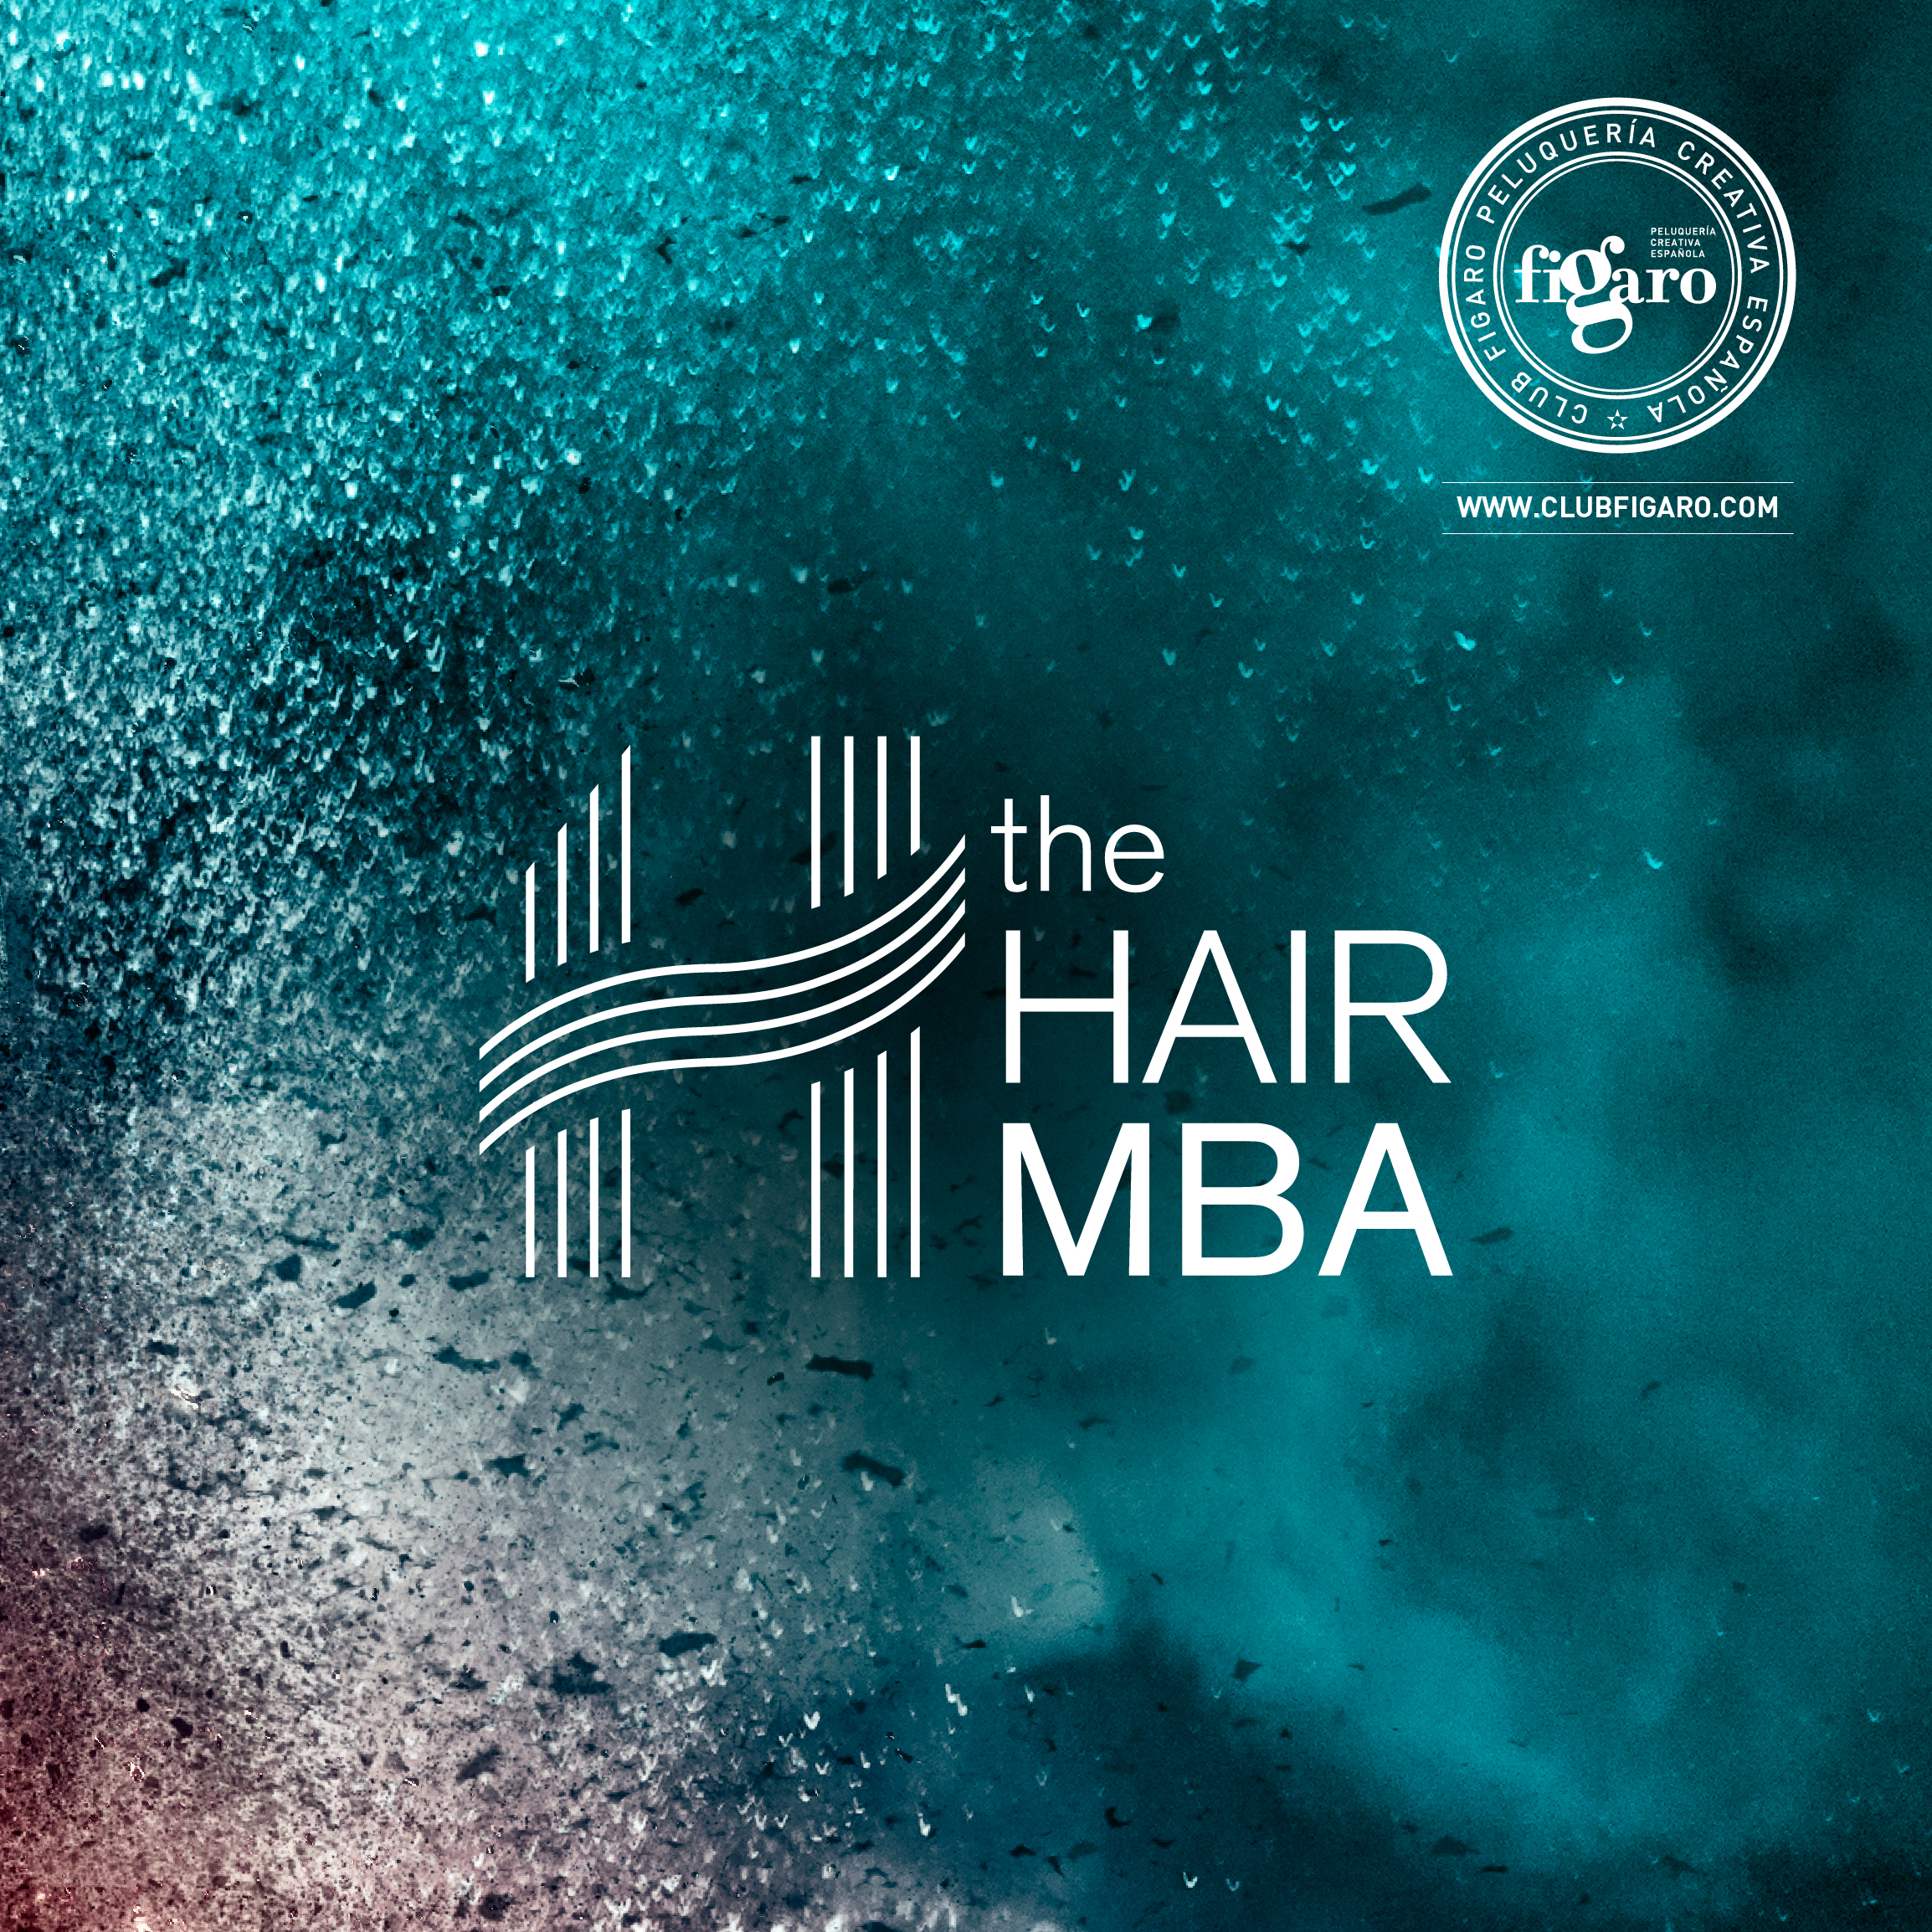 Club Fígaro se alía con The Hair MBA